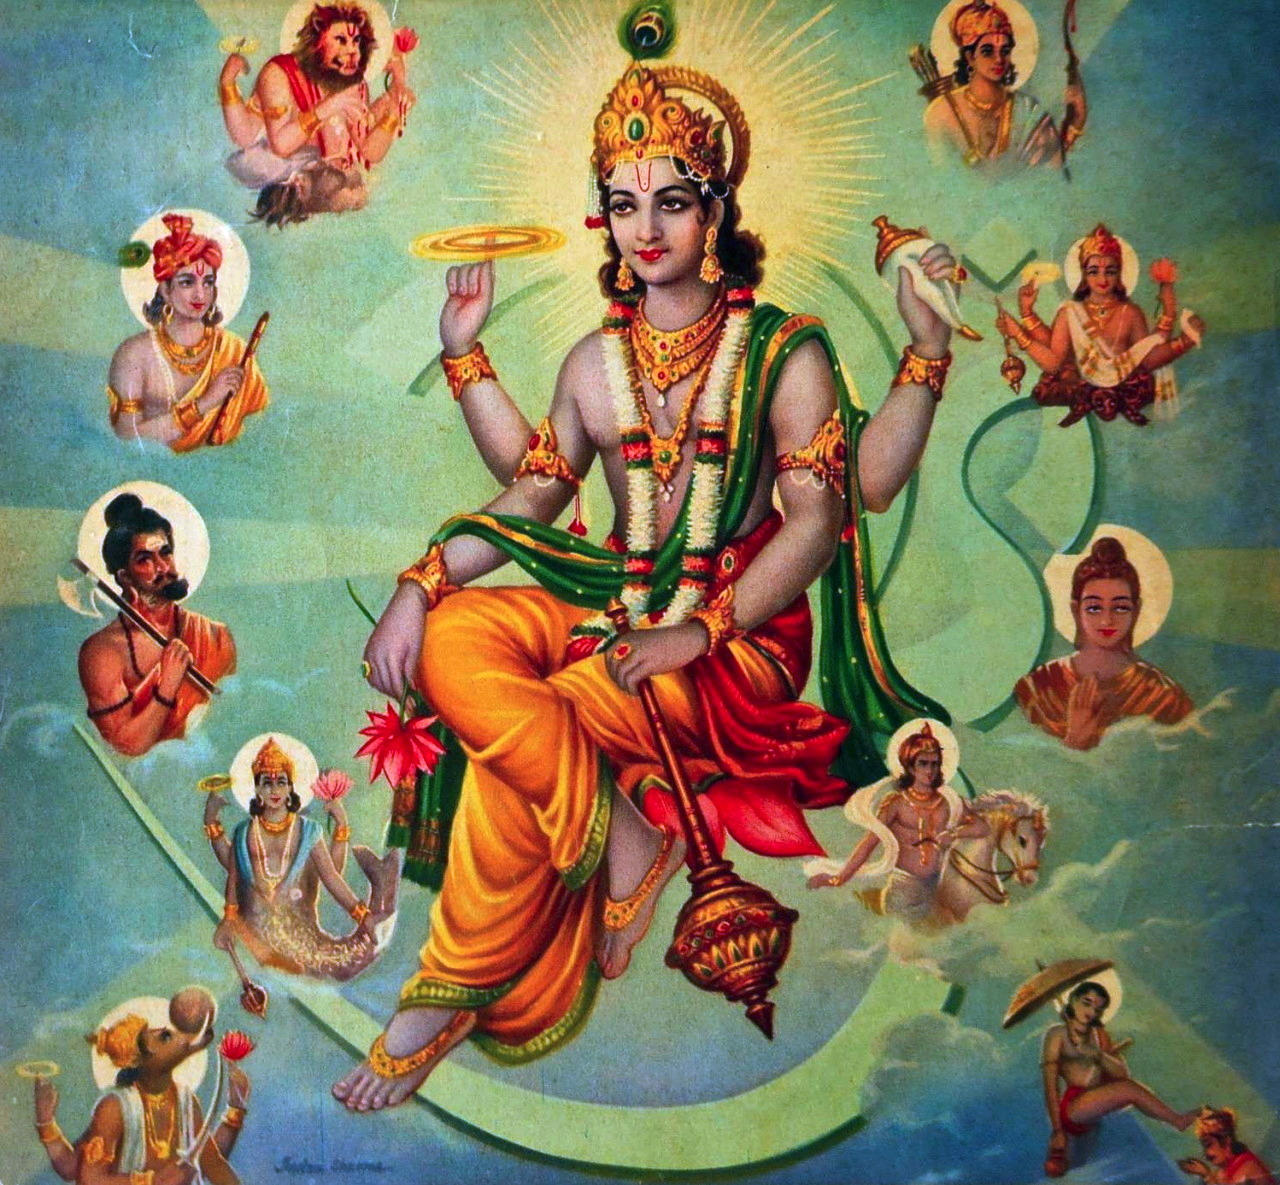 Astonishing Compilation of Lord Vishnu Images in Full 4K: 999+ Best Picks